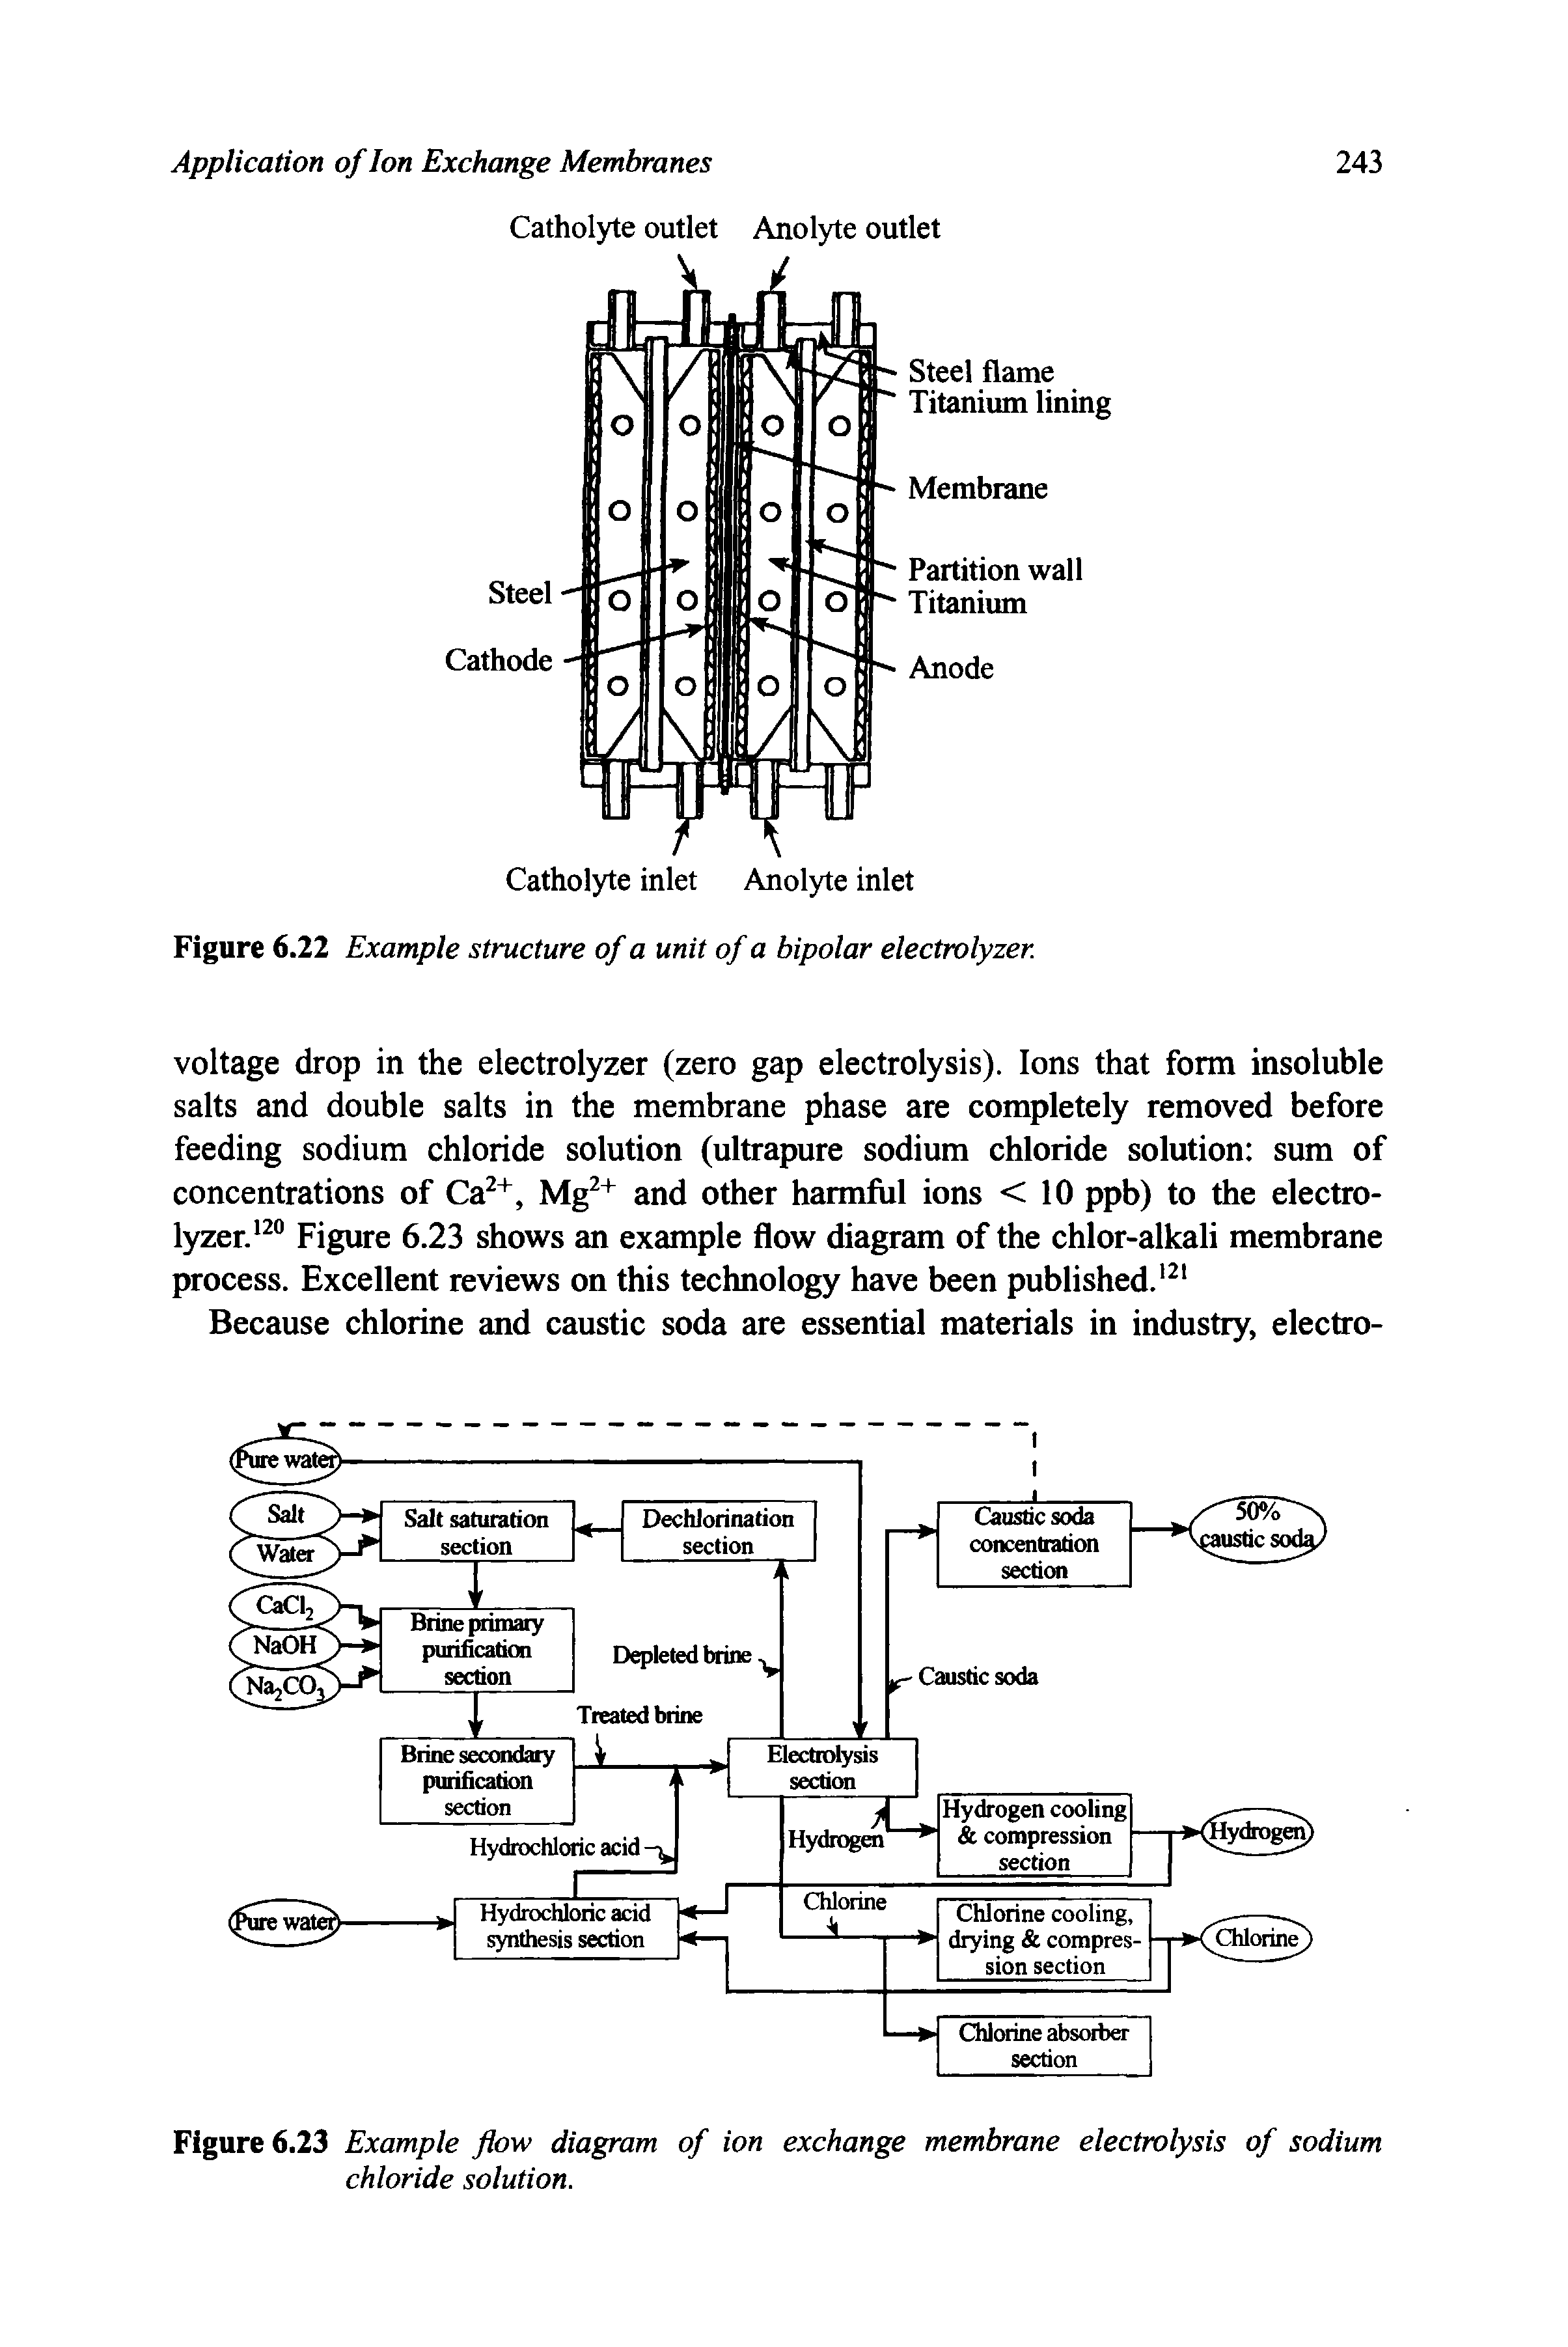 Figure 6.23 Example flow diagram of ion exchange membrane electrolysis of sodium chloride solution.